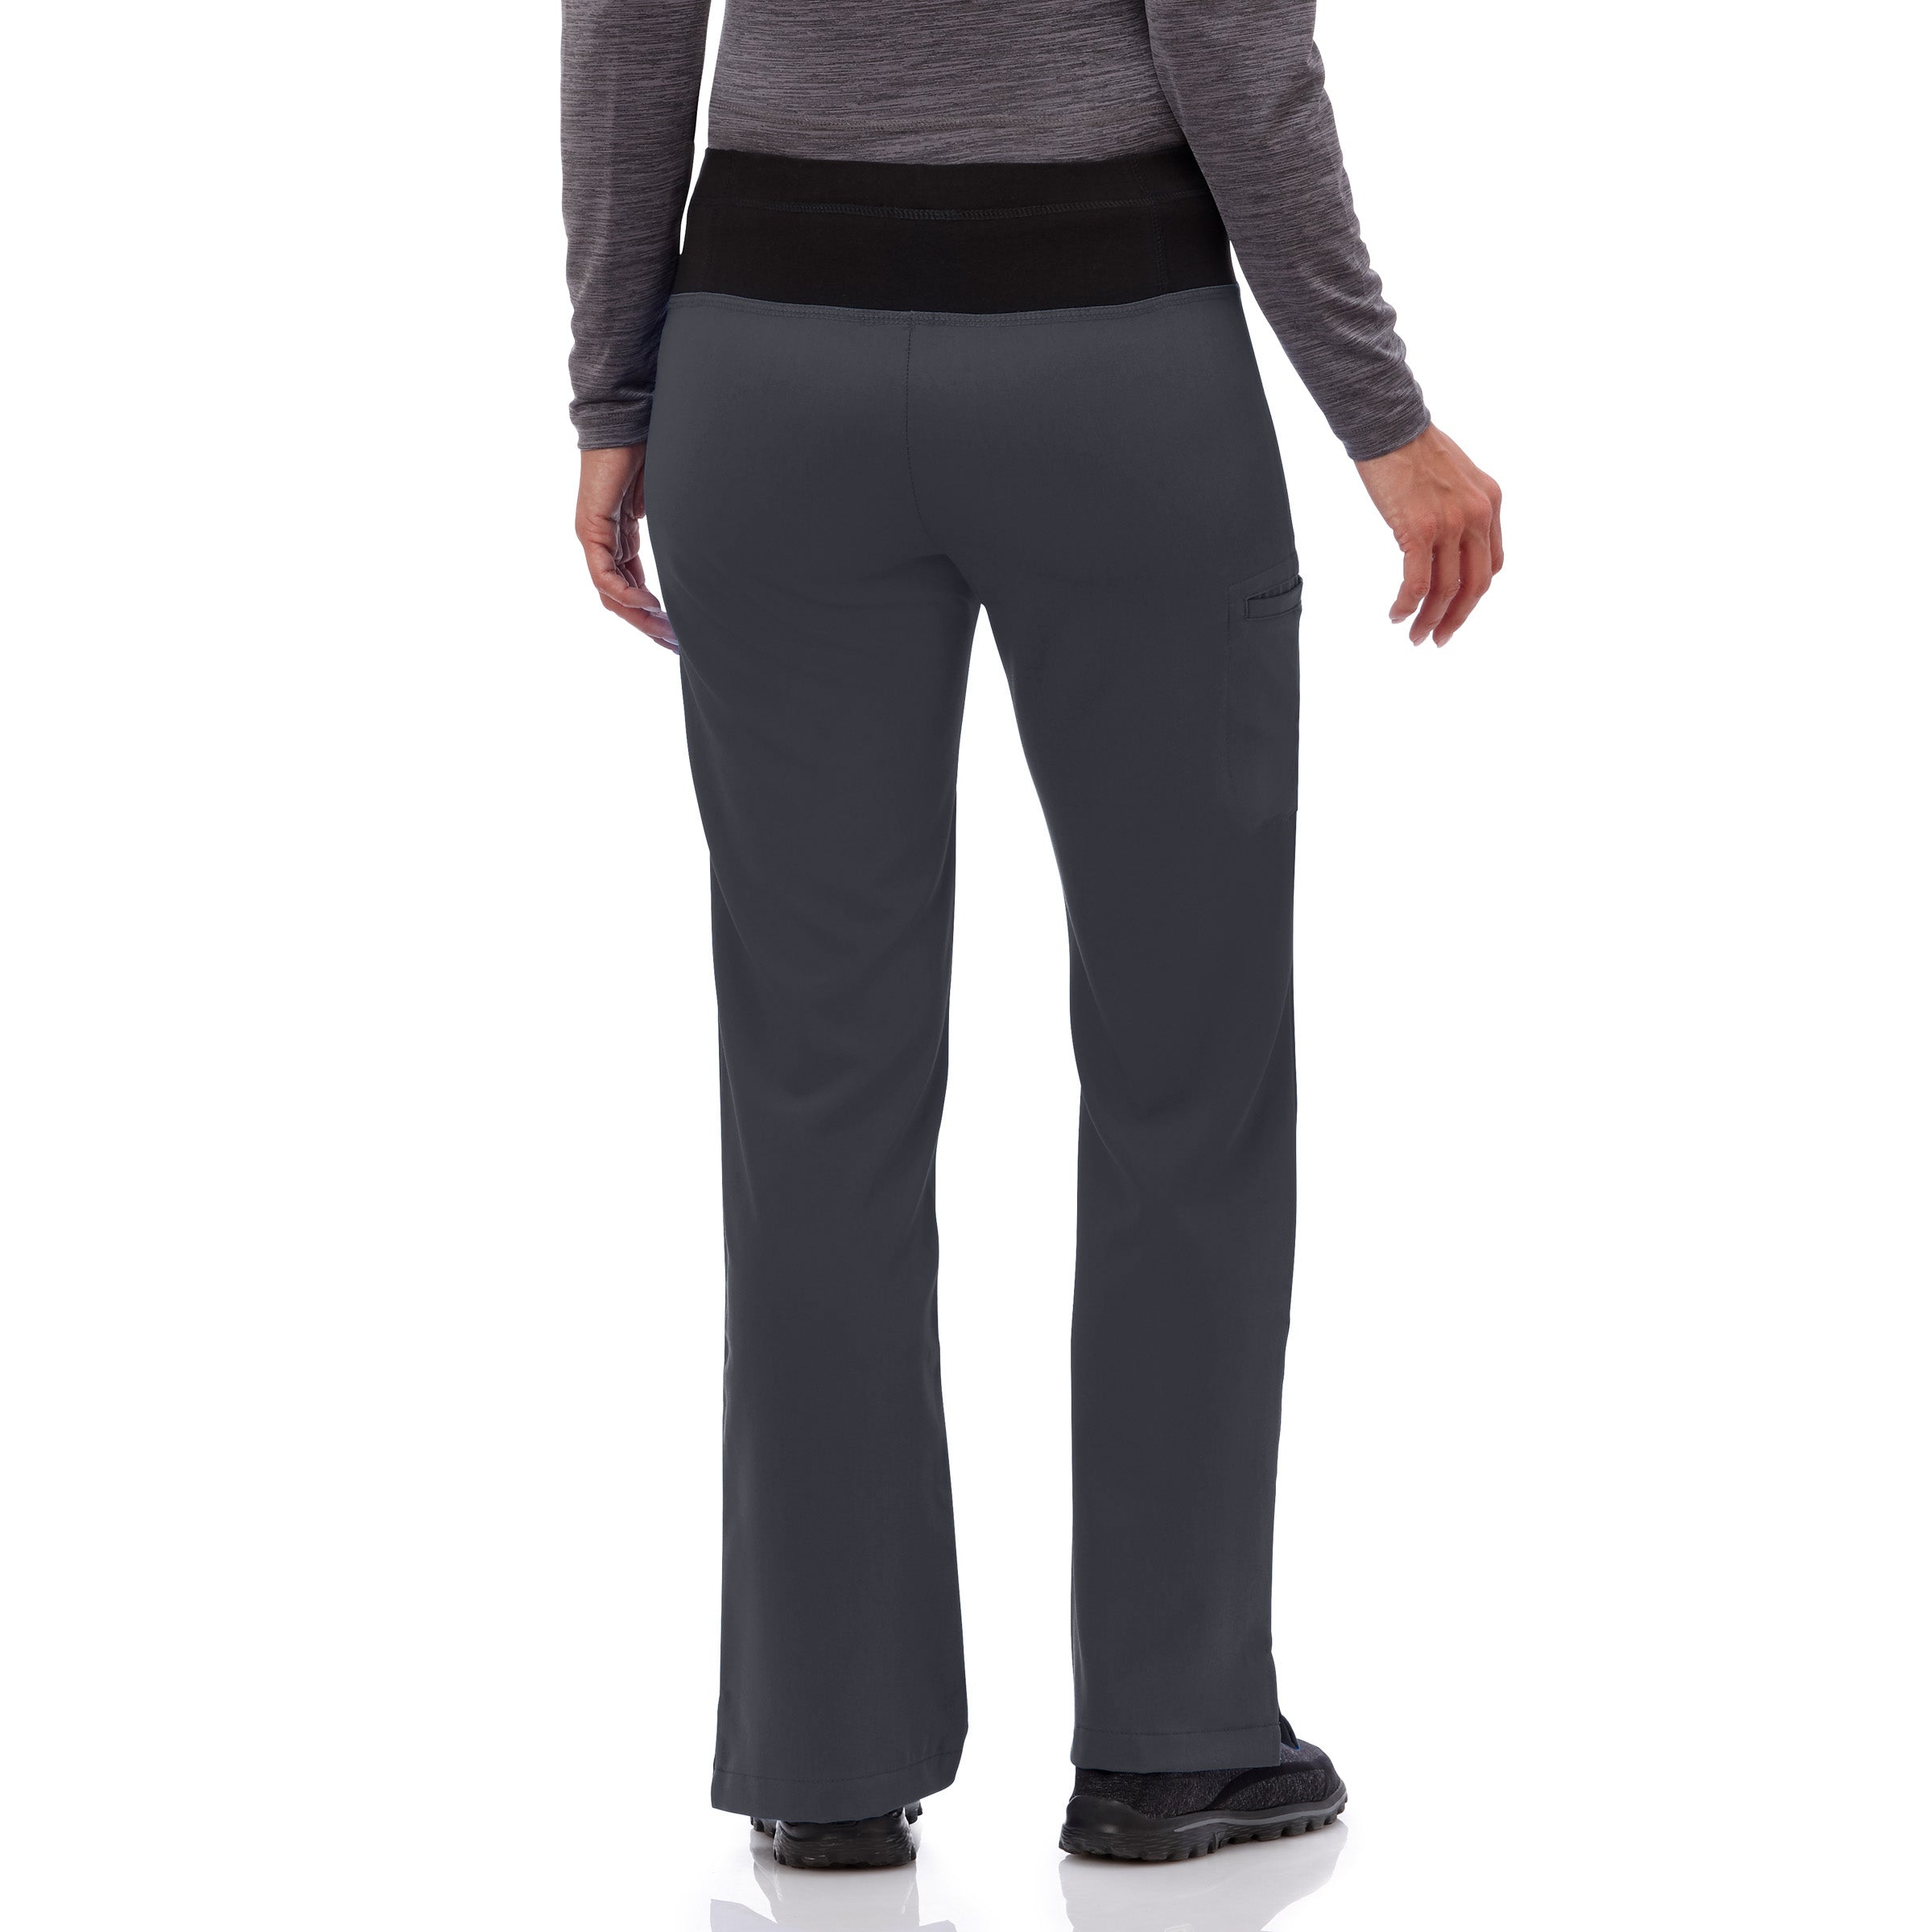 Jockey Scrubs 2358 Women's Soft Comfort Yoga Pant in Best Price